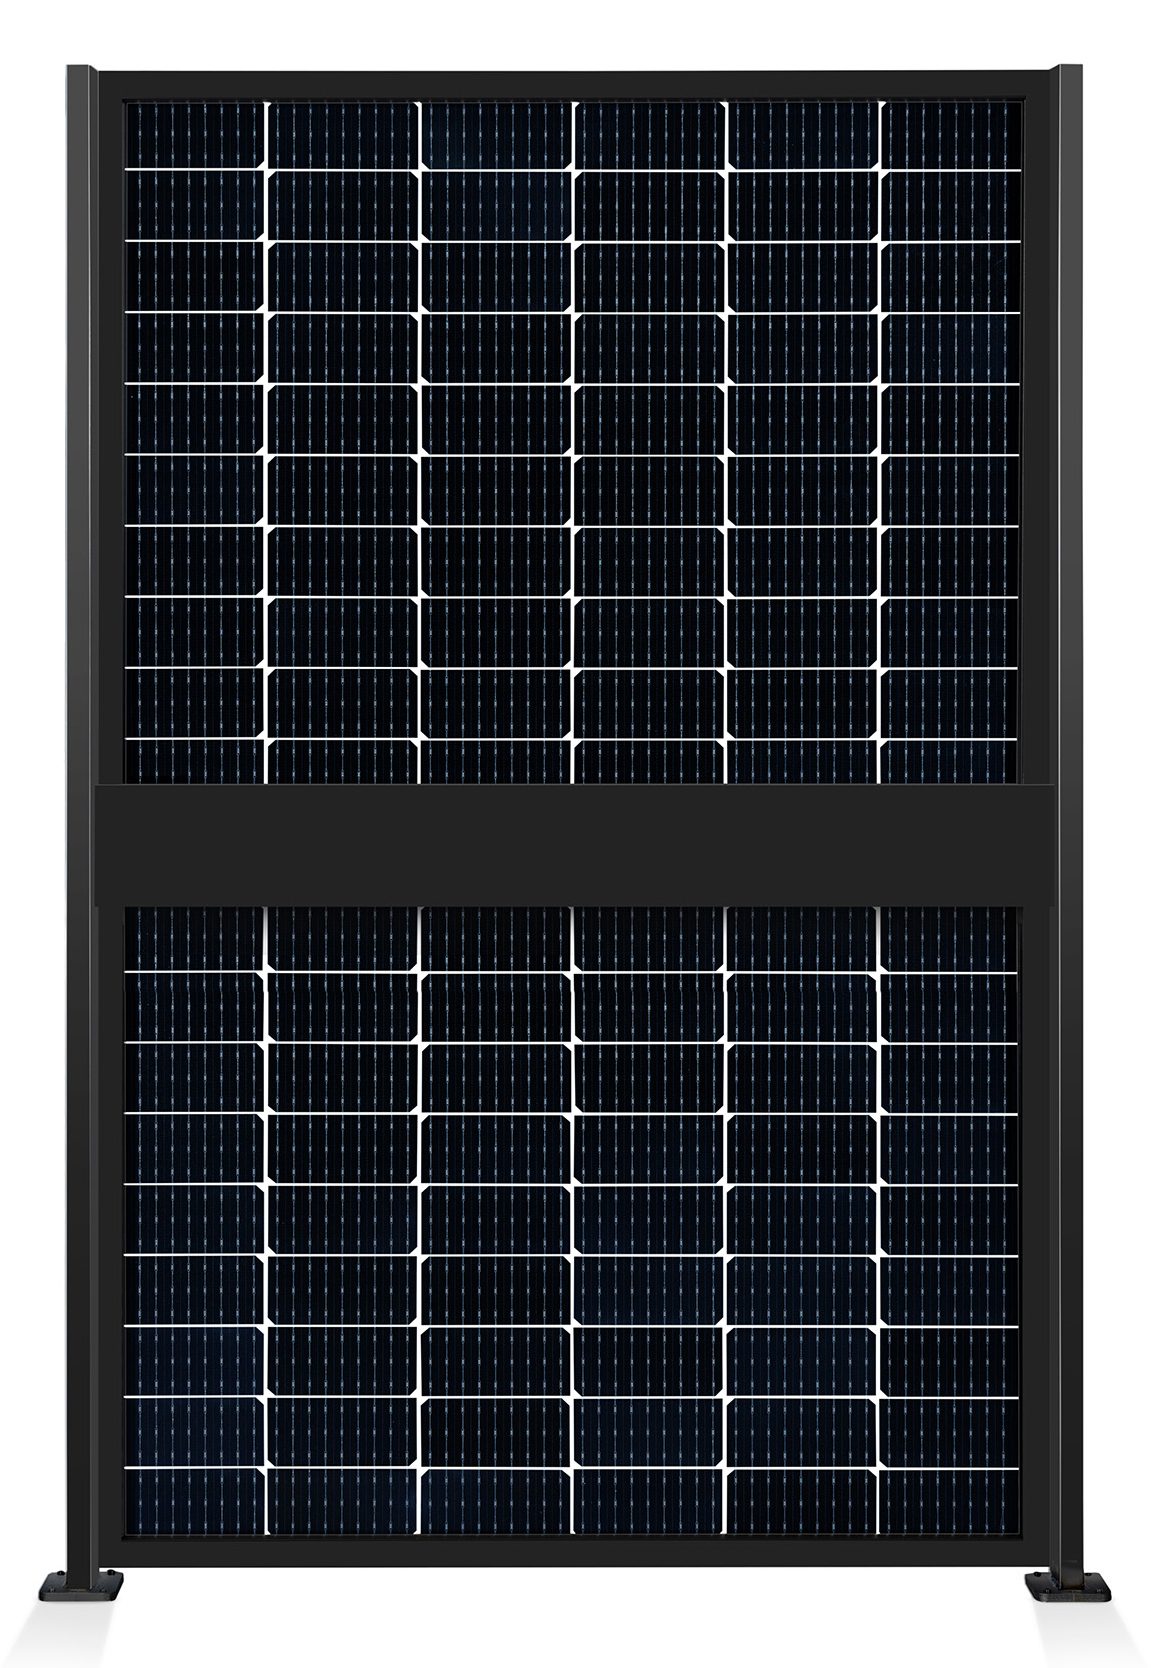 ausschnitt_0020_element-solar-sichtschutz-pv-photovoltaik-zaun-collection-hutter-panel-transparent-pfosten-schwarz-rueck.jpg